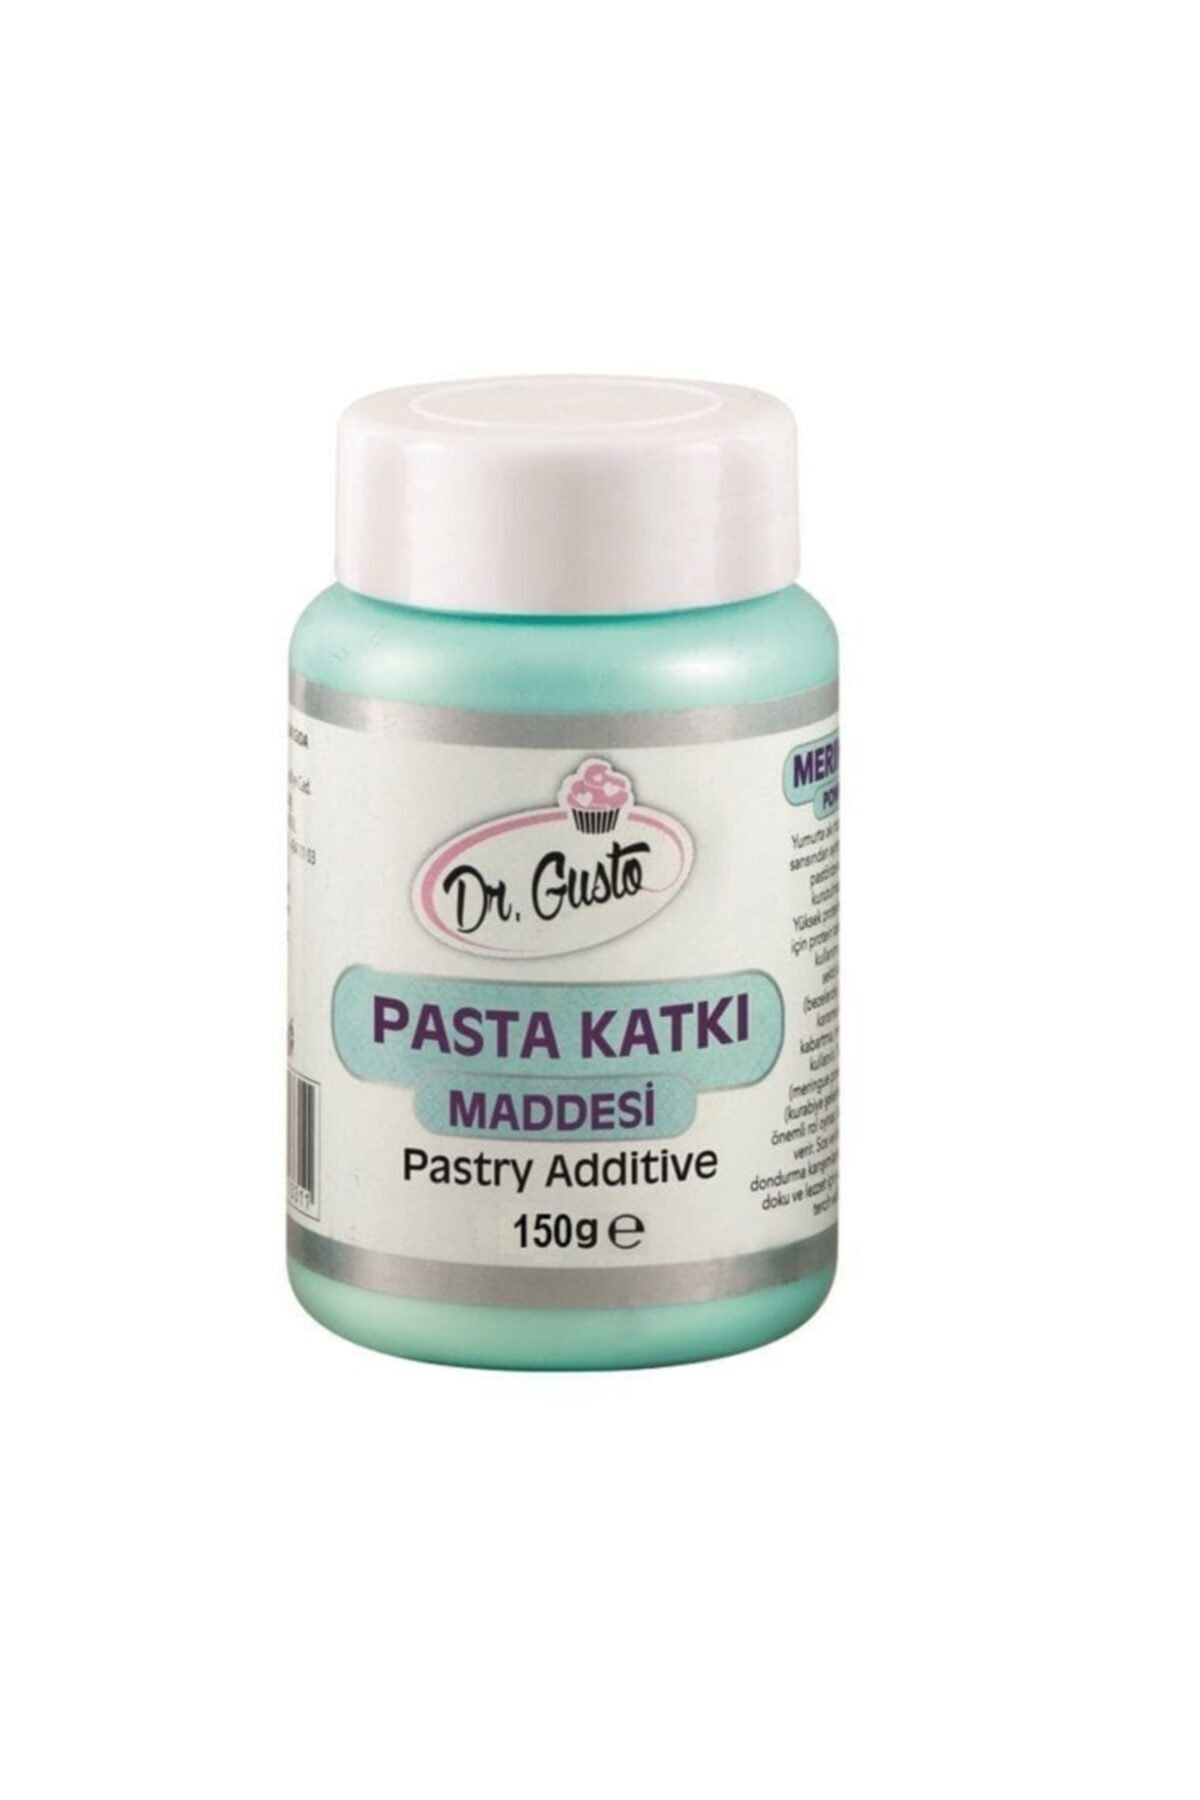 Dr. Gusto Pasta Katkı Maddesi 150 gr